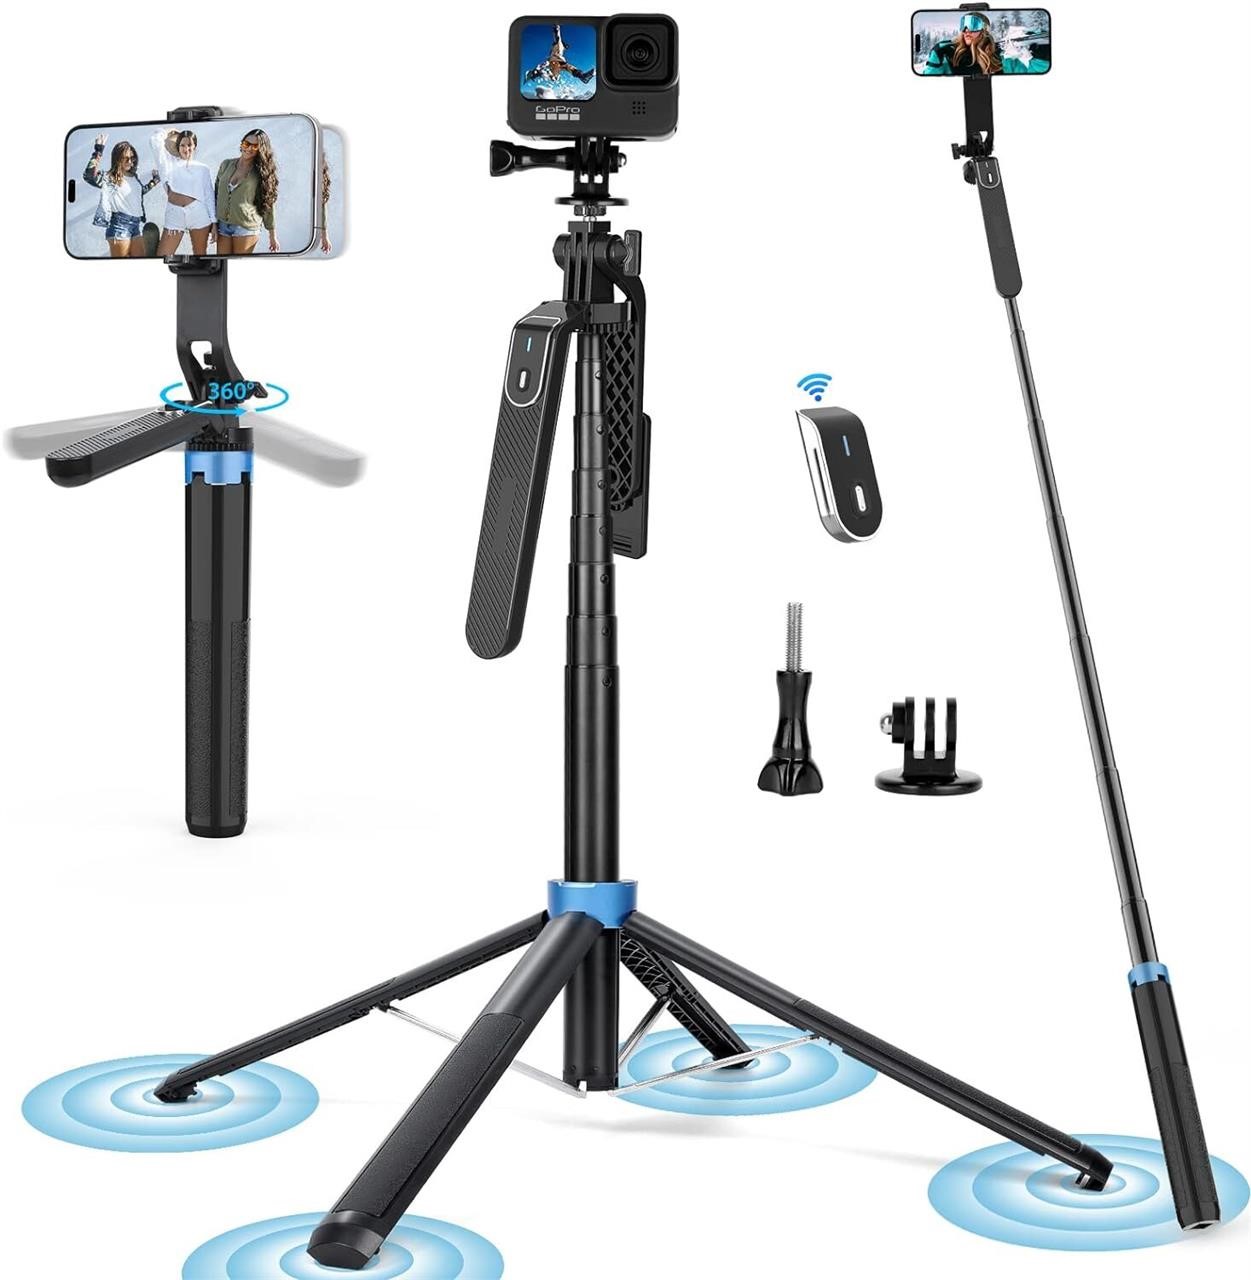 Eocean 71 Selfie Stick Tripod with Remote